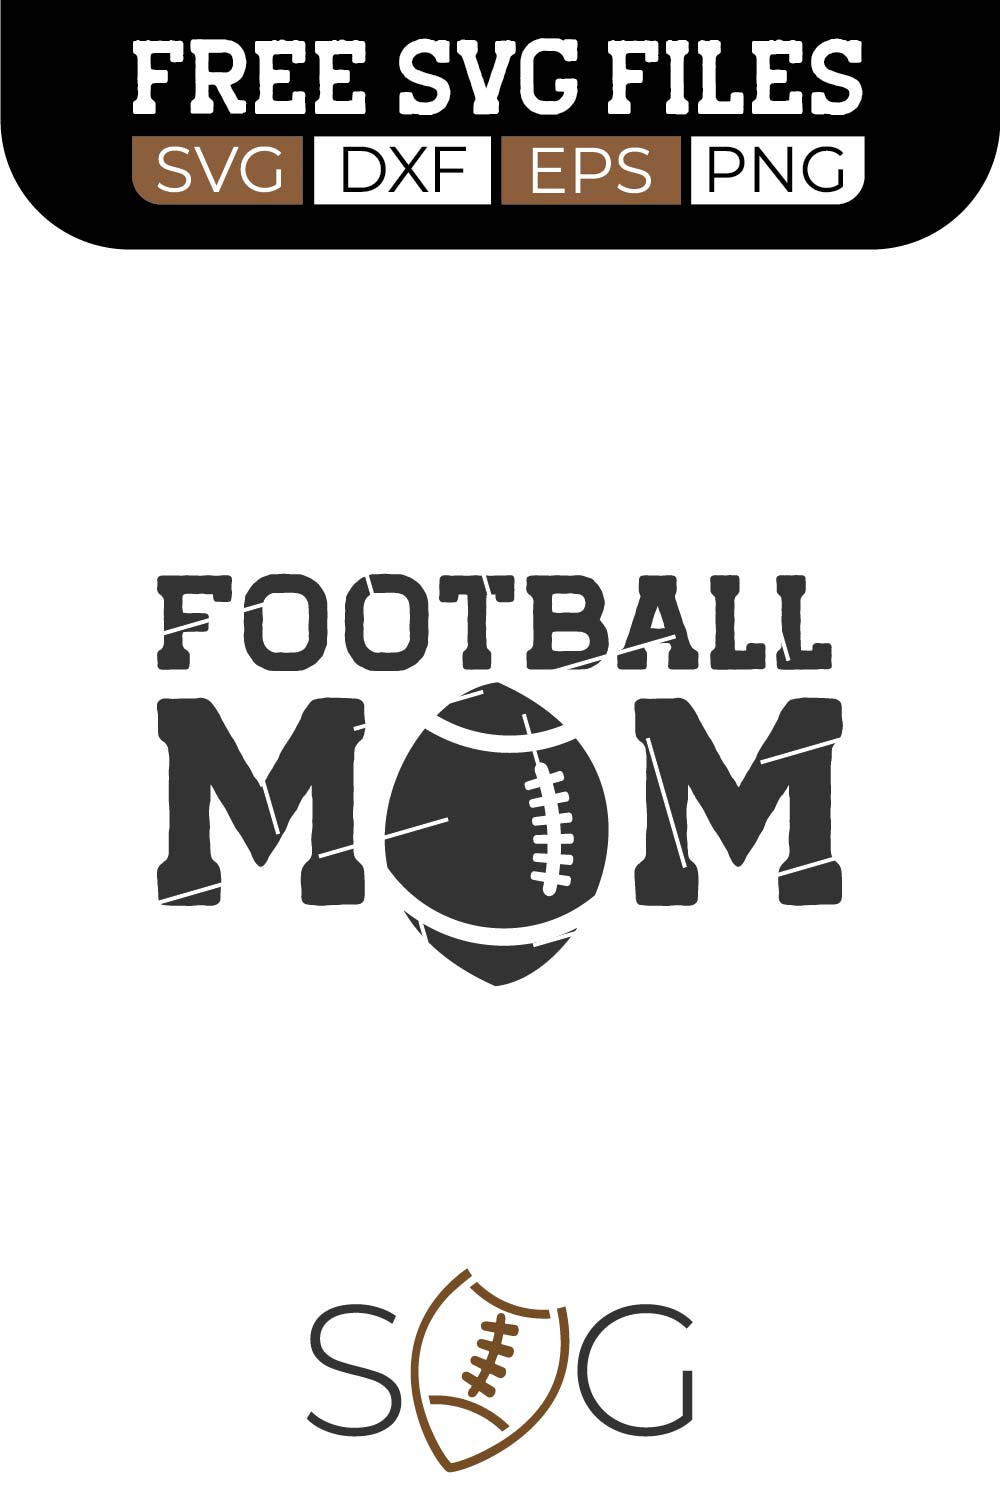 Download Football Mom SVG Cut Files Free Download | FootballSVG.com